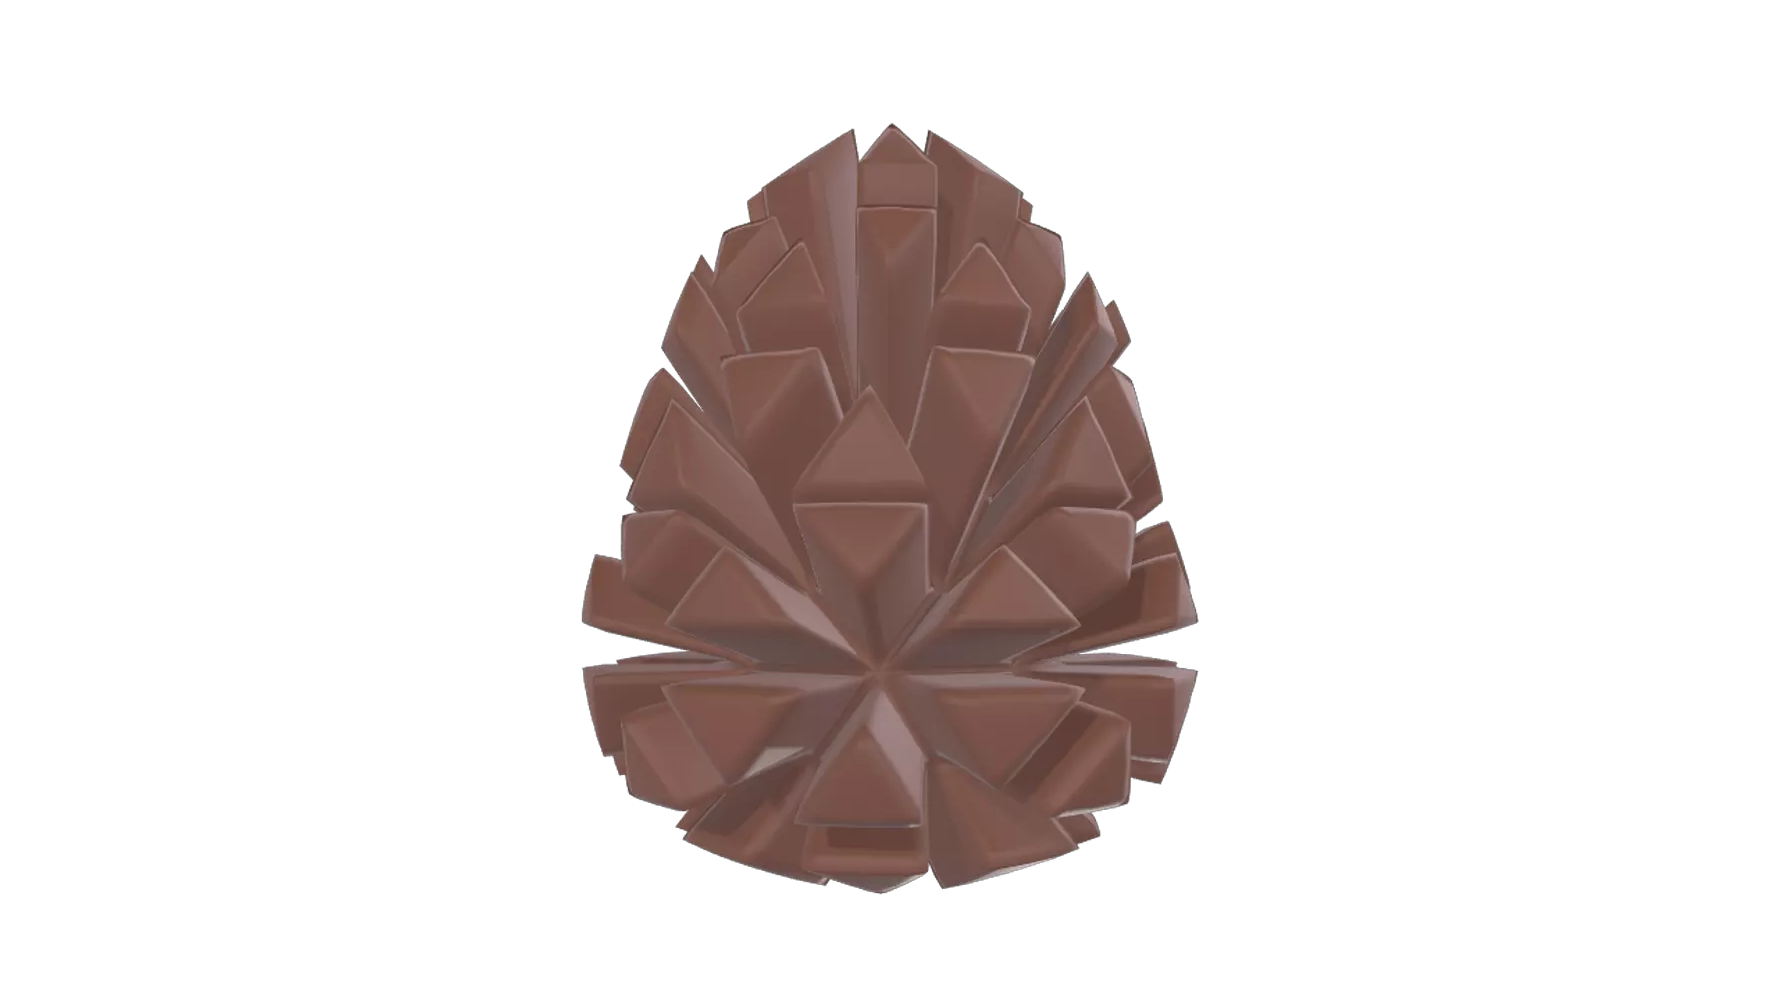 Pine Cone 3D Graphic